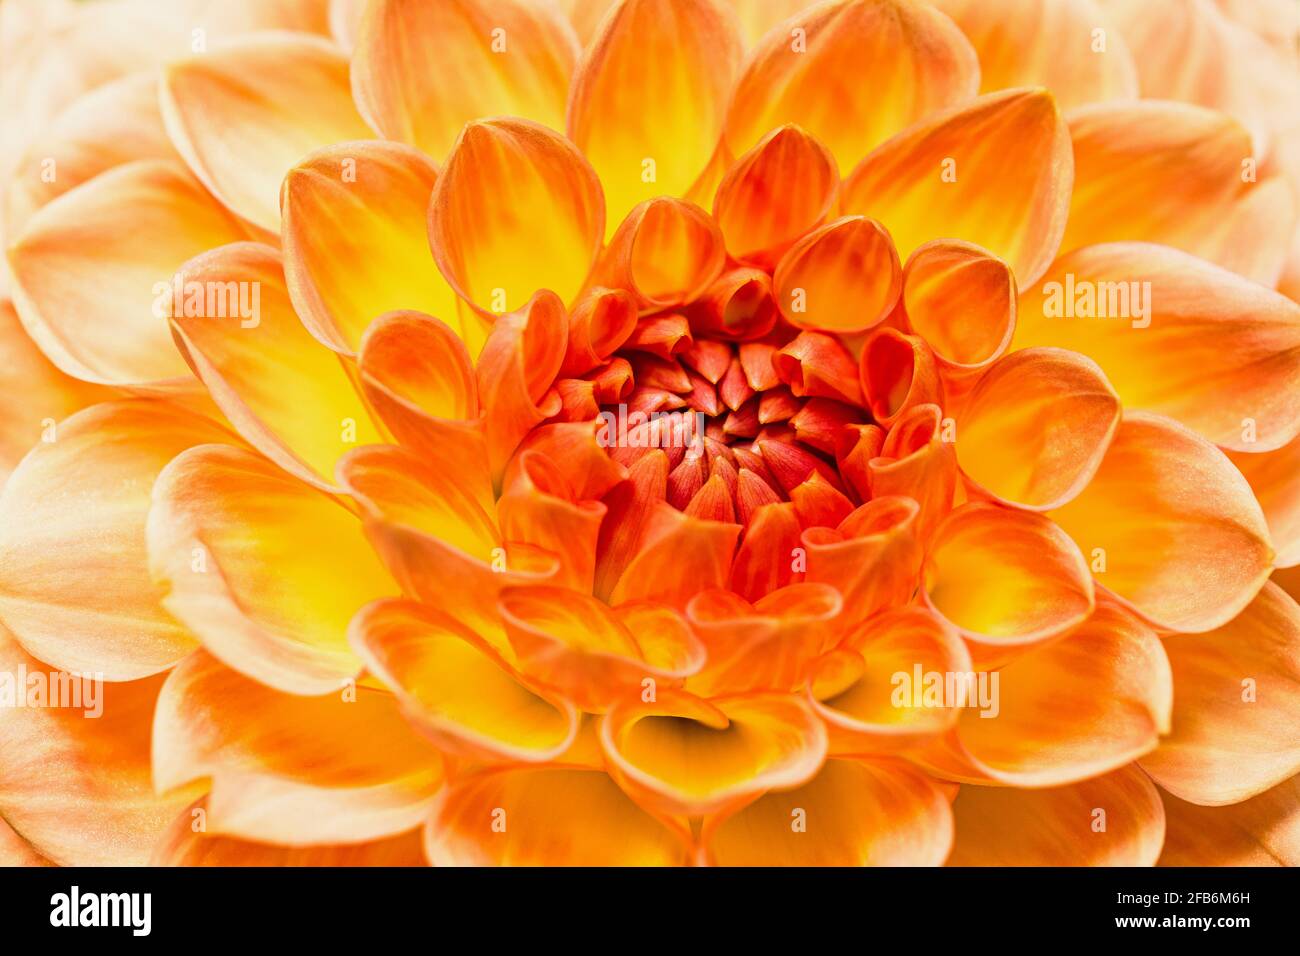 Dahlia, Close up of orange coloured flower showing petal pattern. Stock Photo